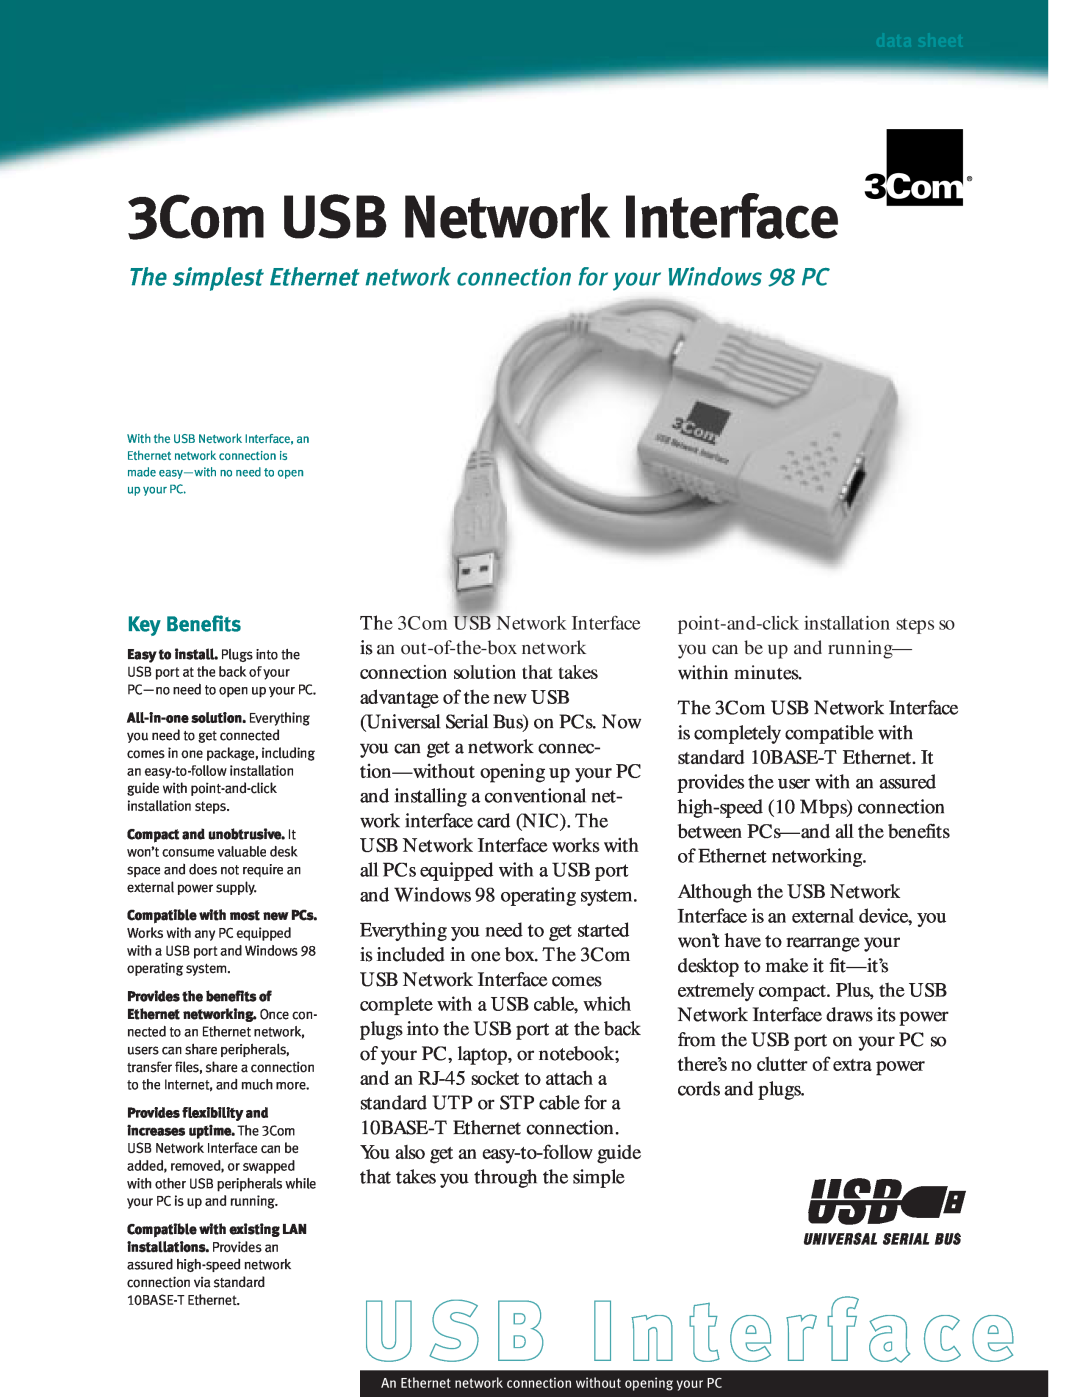 3Com manual U S B I n terface, 3Com USB Network Interface, Key Benefits 